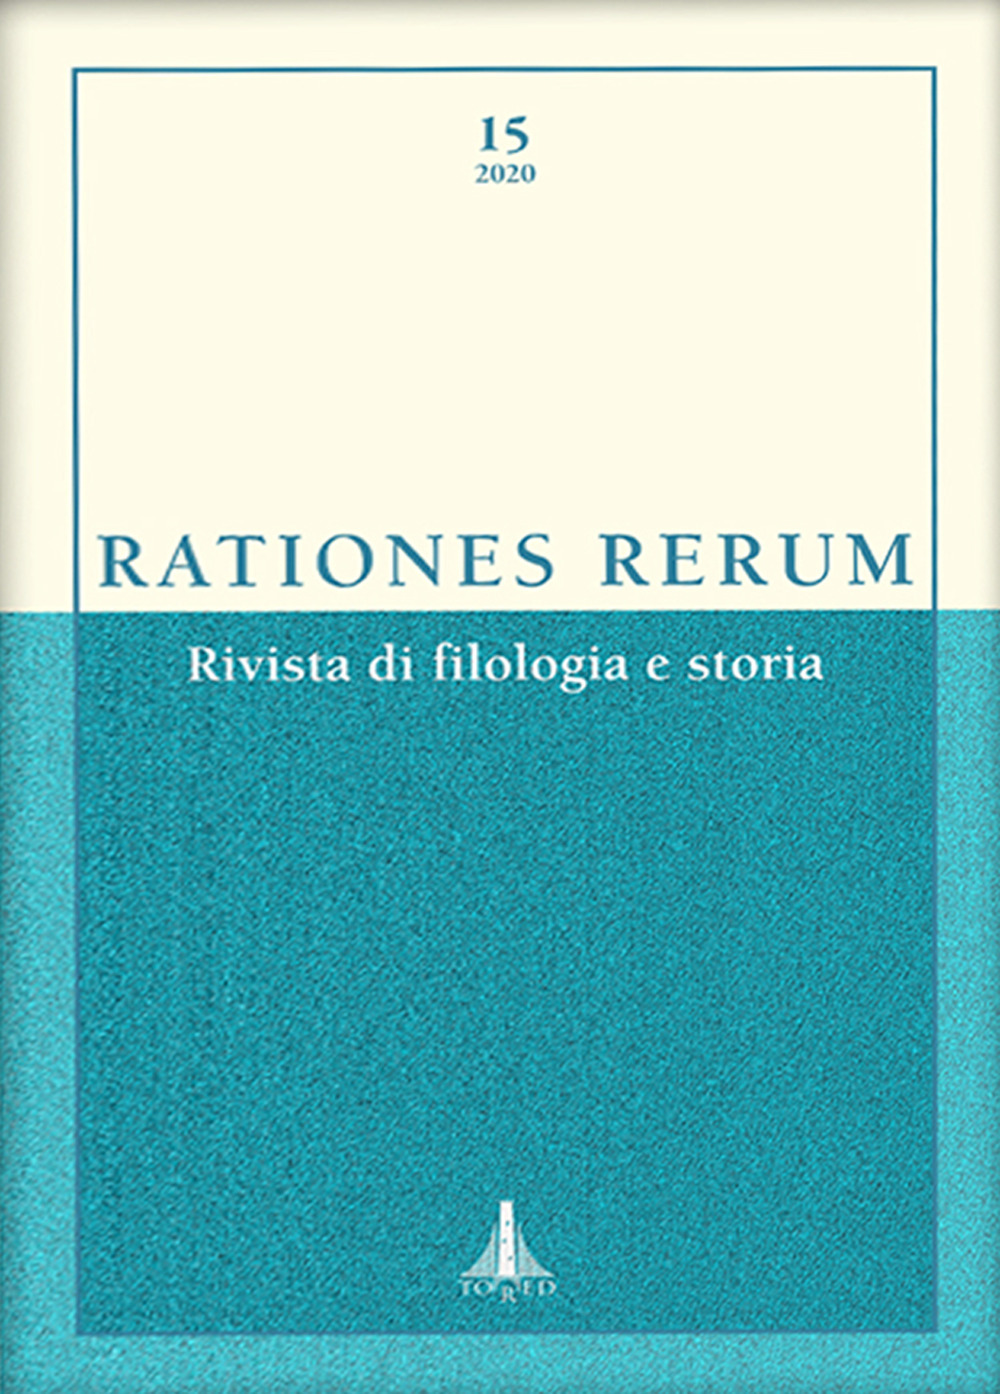 Rationes rerum. Rivista di filologia e storia. Ediz. multilingue. Vol. 15